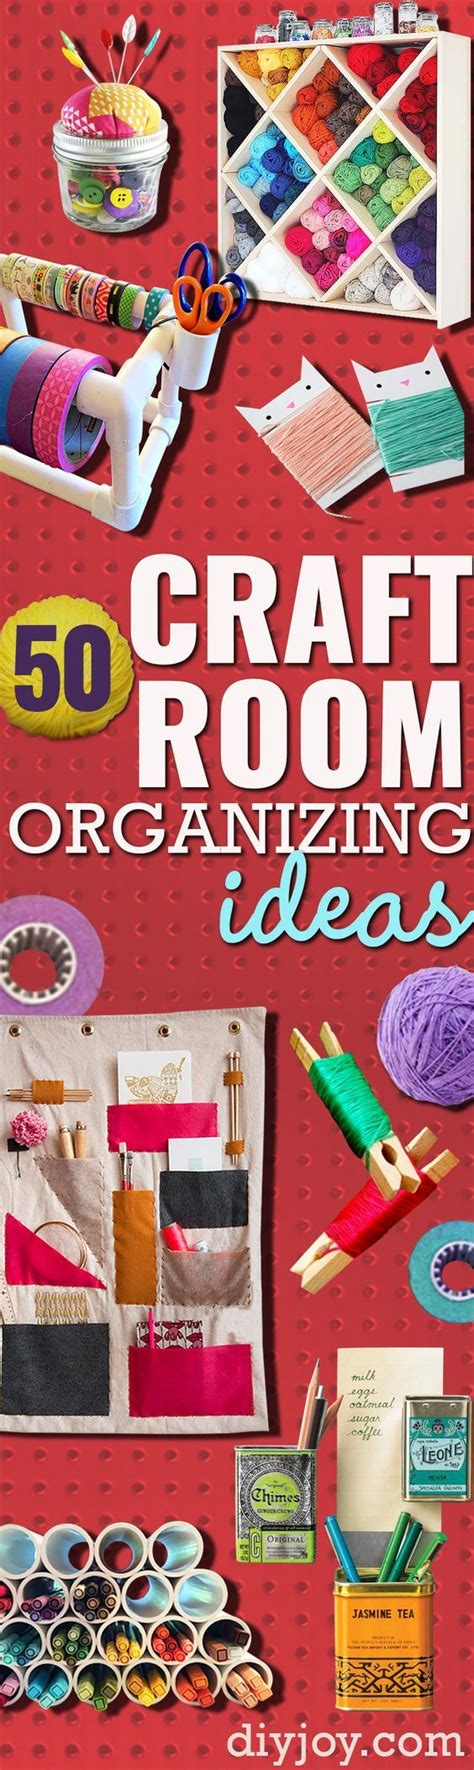 DIY Craft Room Ideas and Craft Room Organization Projects | Craft room, Craft room storage ...